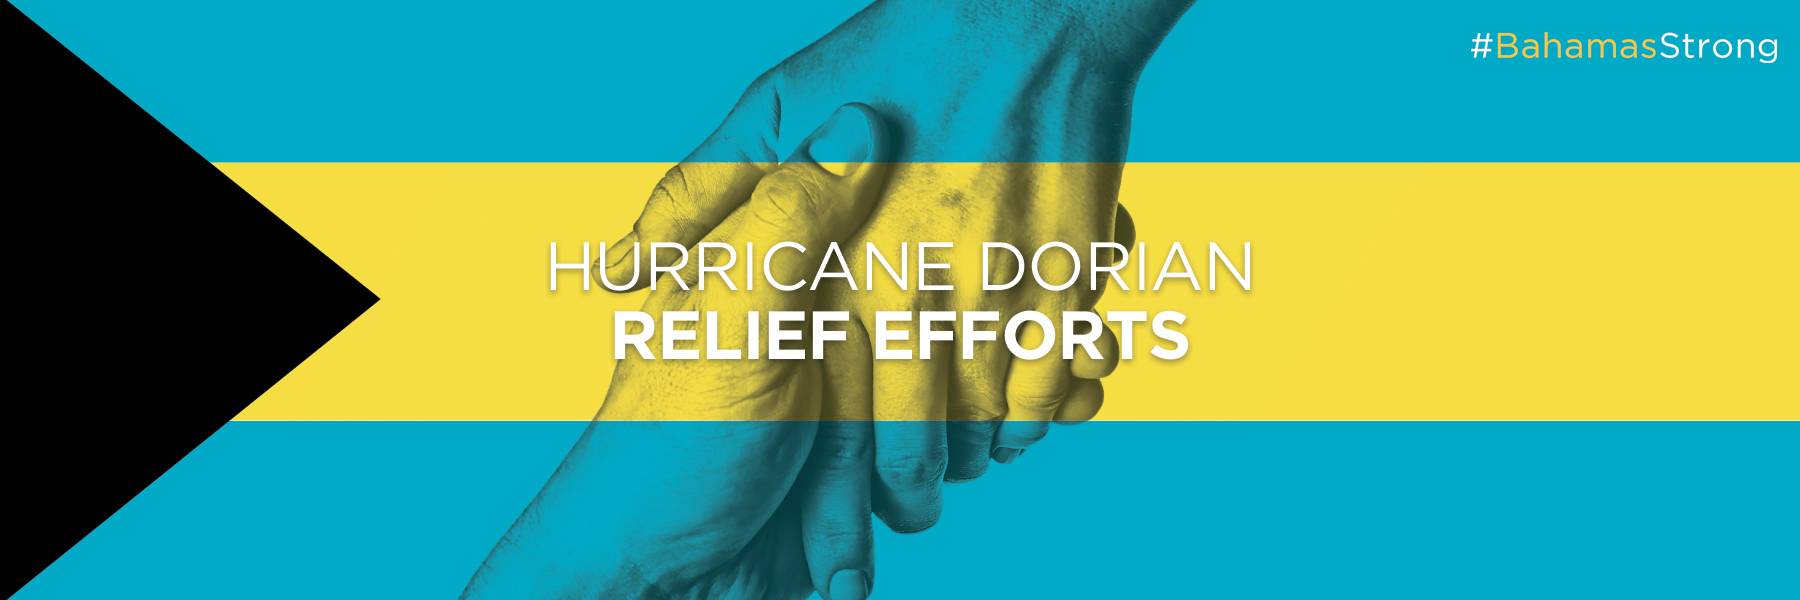 Hurricane Dorian Relief Efforts Banner